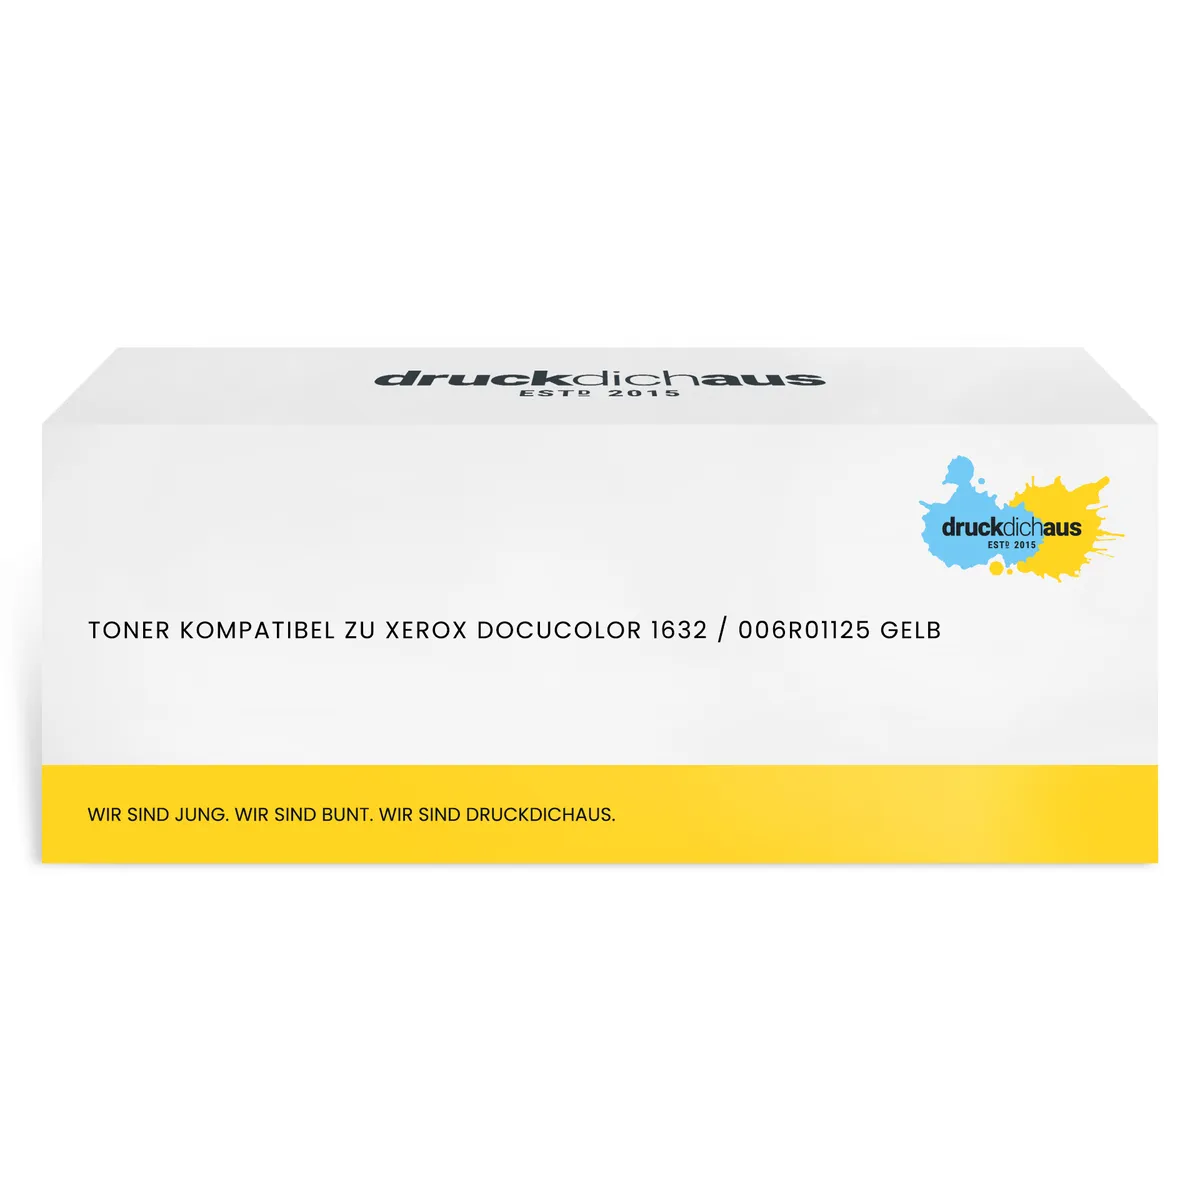 Toner kompatibel zu Xerox DocuColor 1632 / 006R01125 gelb